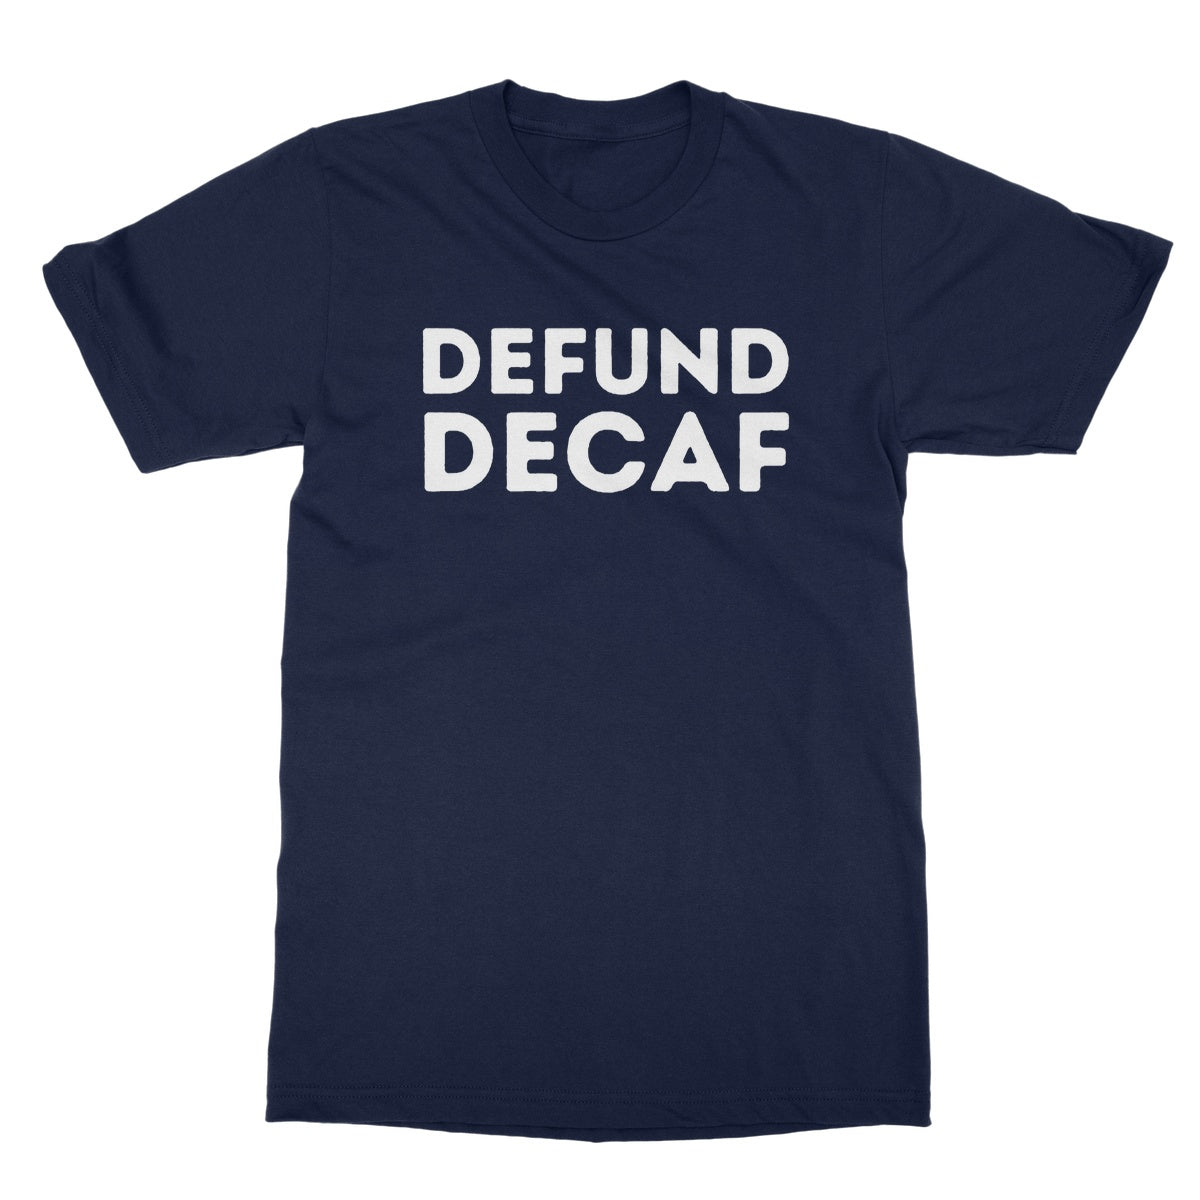 defund decaf t shirt navy